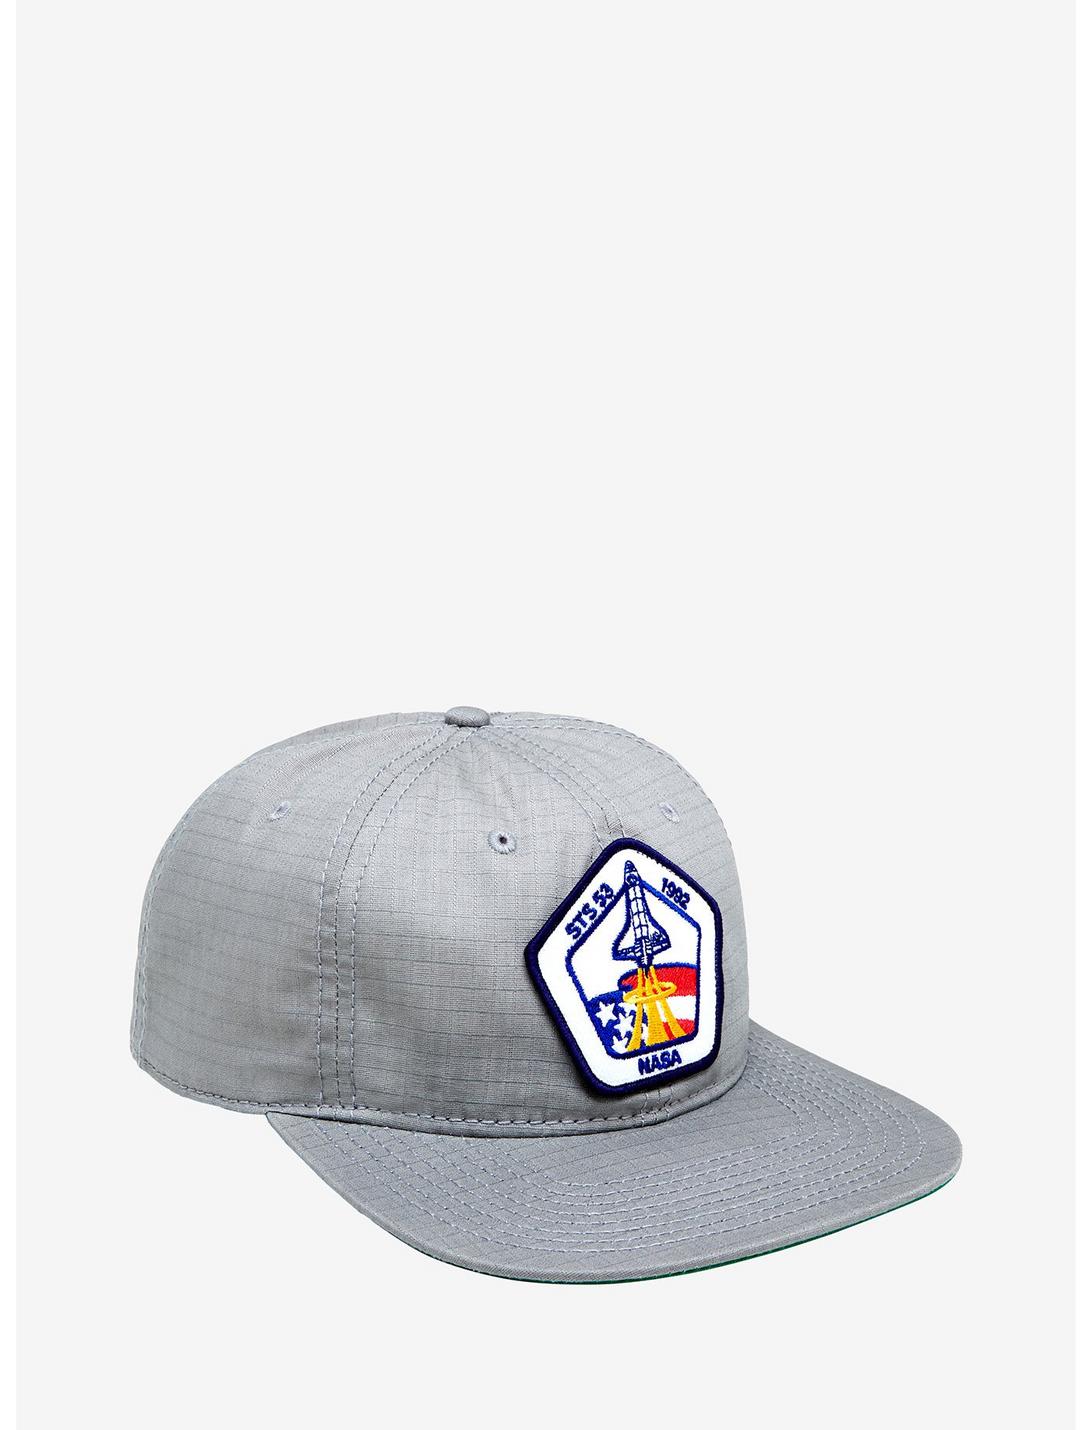 NASA Grey Snapback Hat, , hi-res